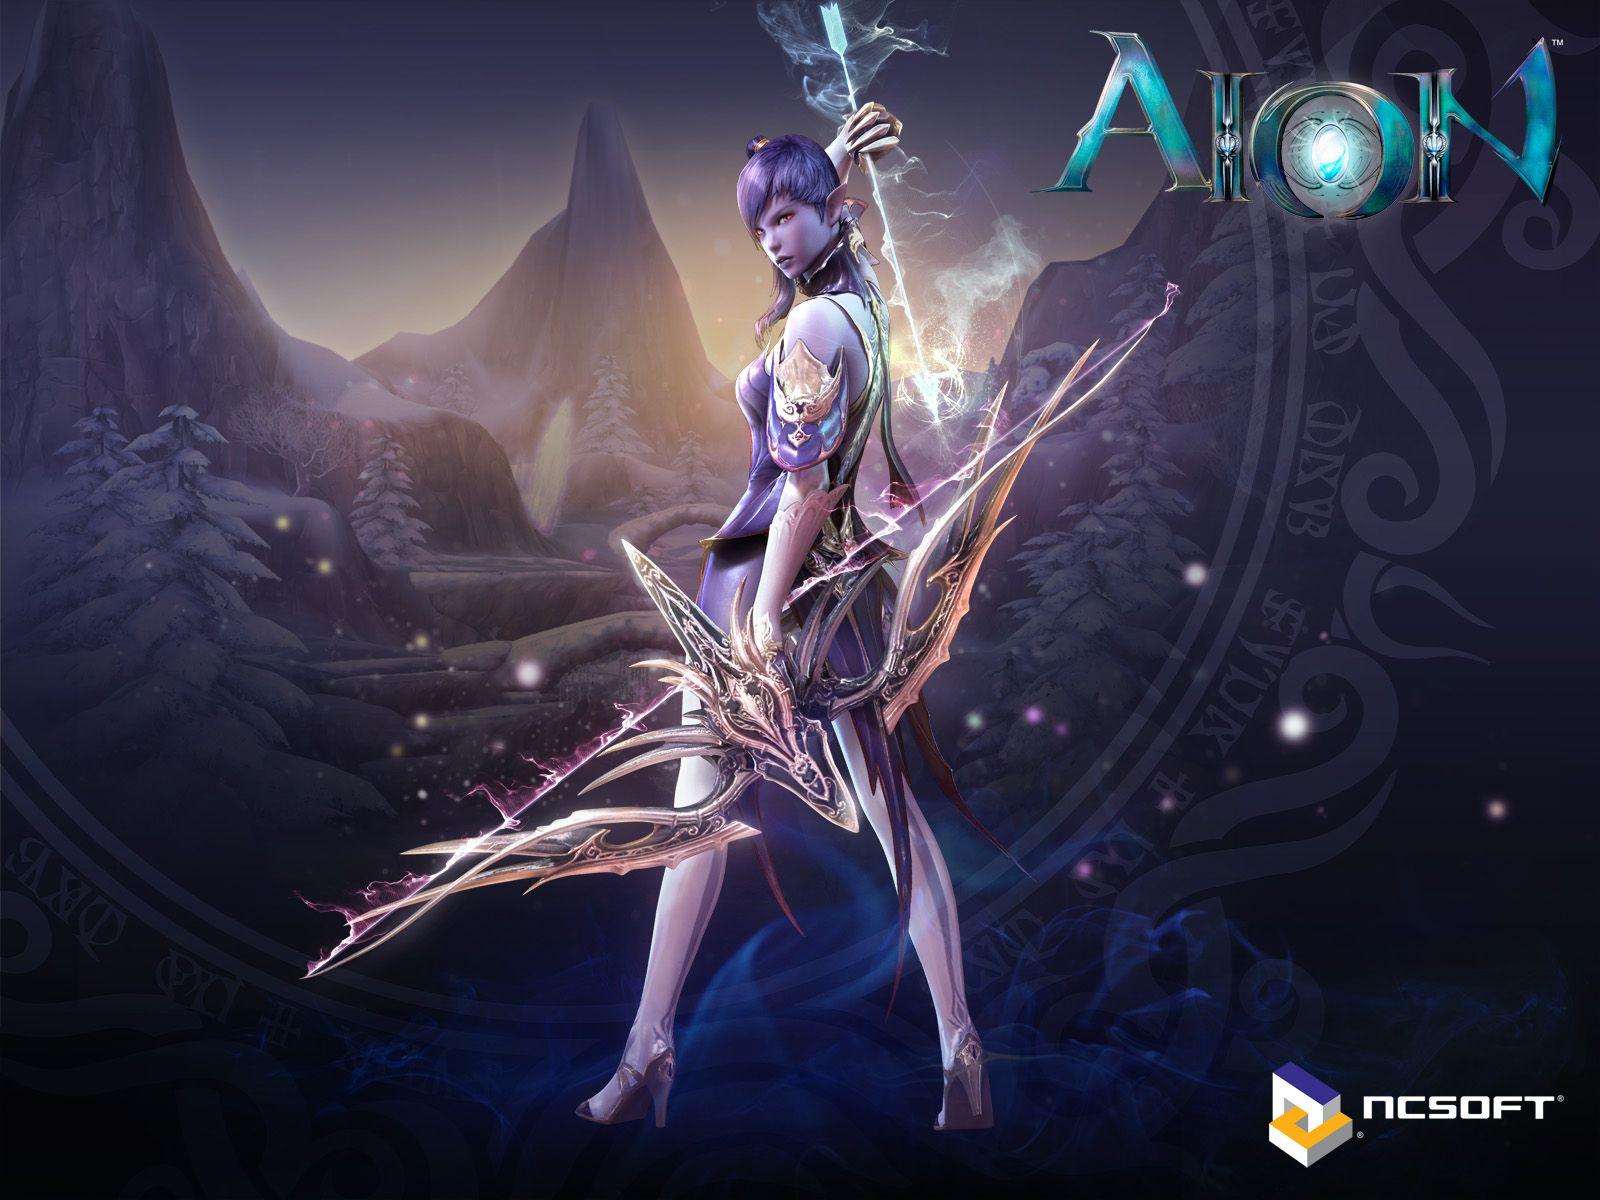 Download desktop wallpaper Archers of MMORPG Aion